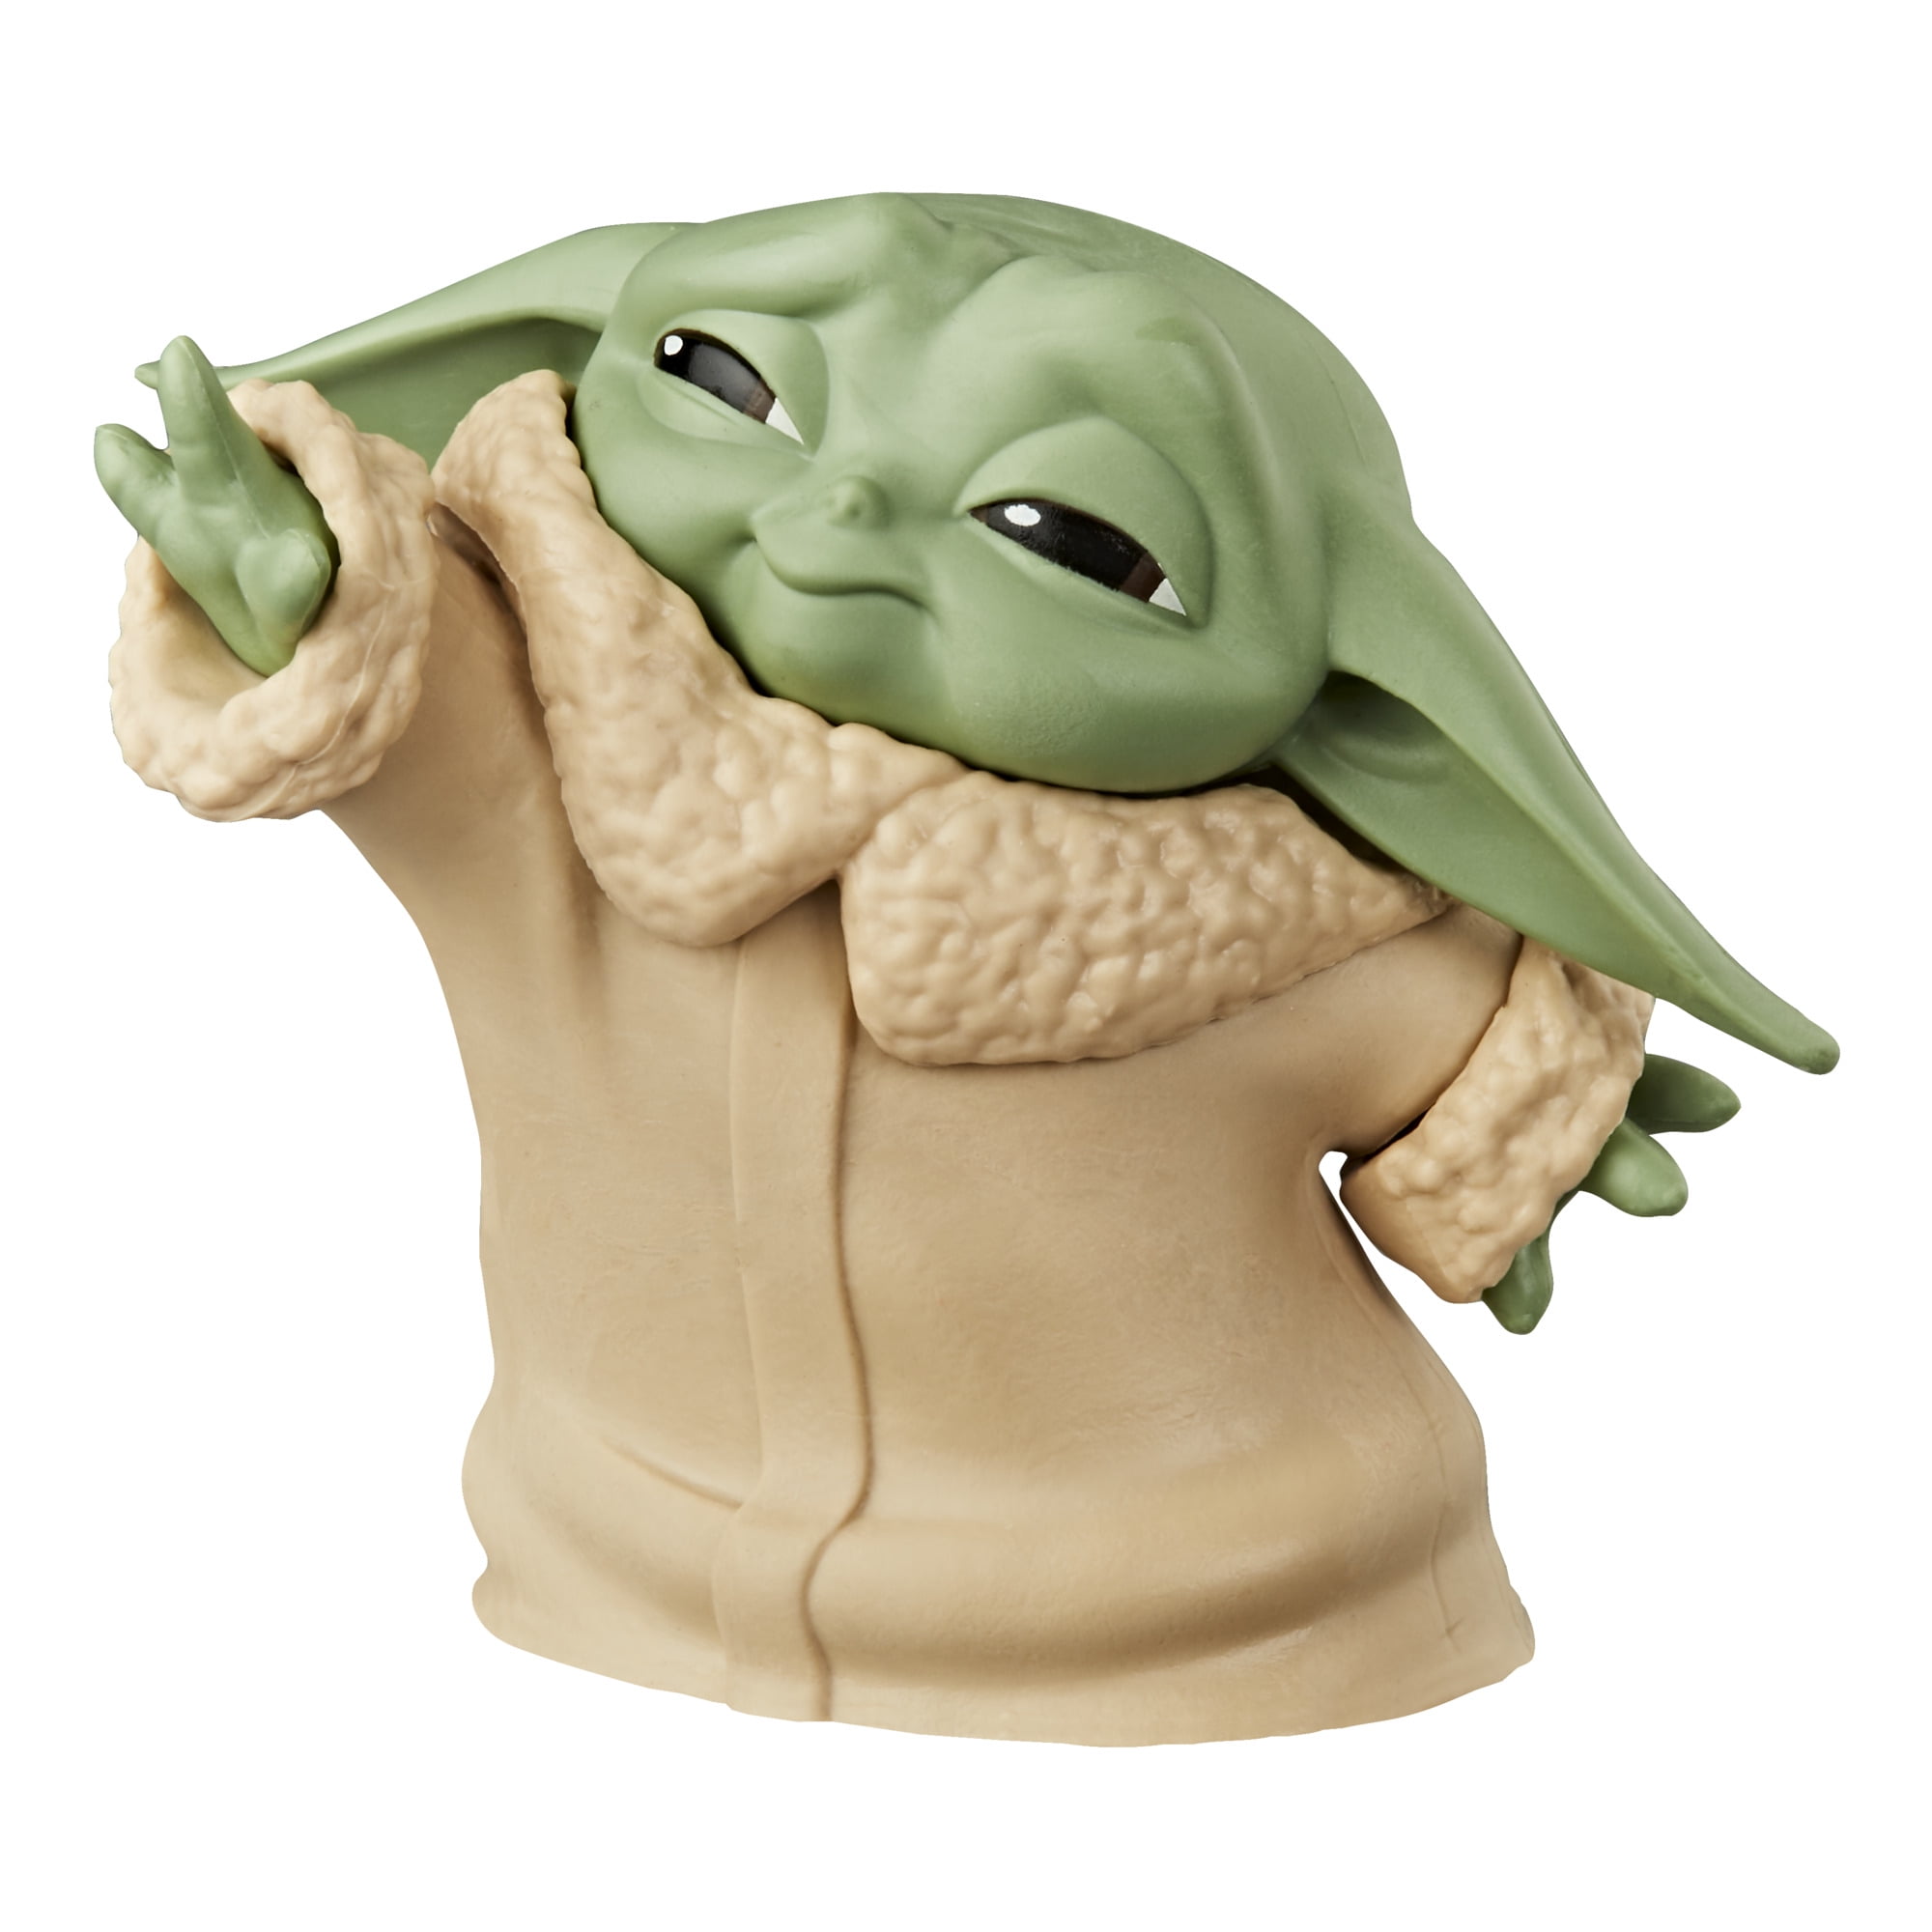 NEW Star Wars Hasbro 6.5 inch The Mandalorian The Child Posable Figure Baby Yoda 